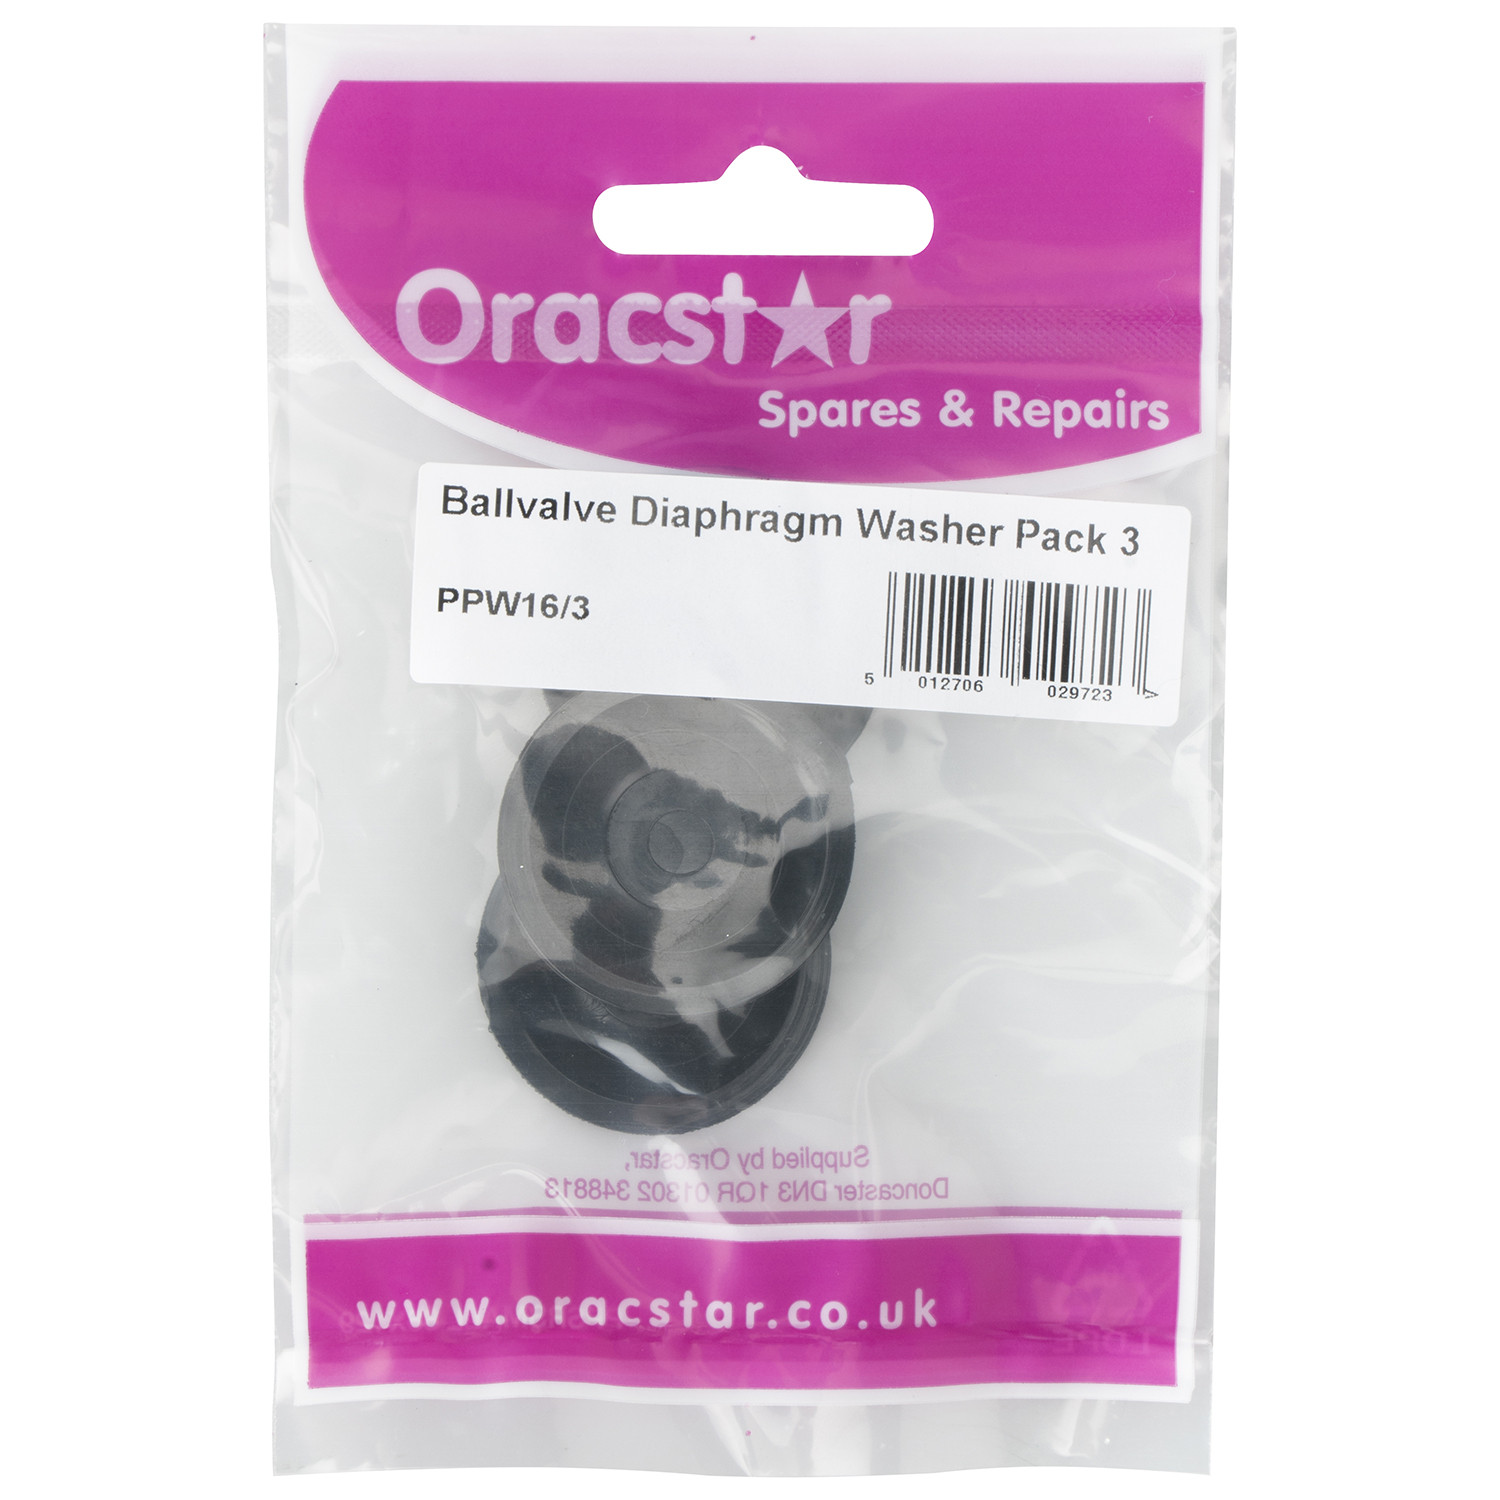 Oracstar Ball Valve Diaphragm Washer 3 Pack Image